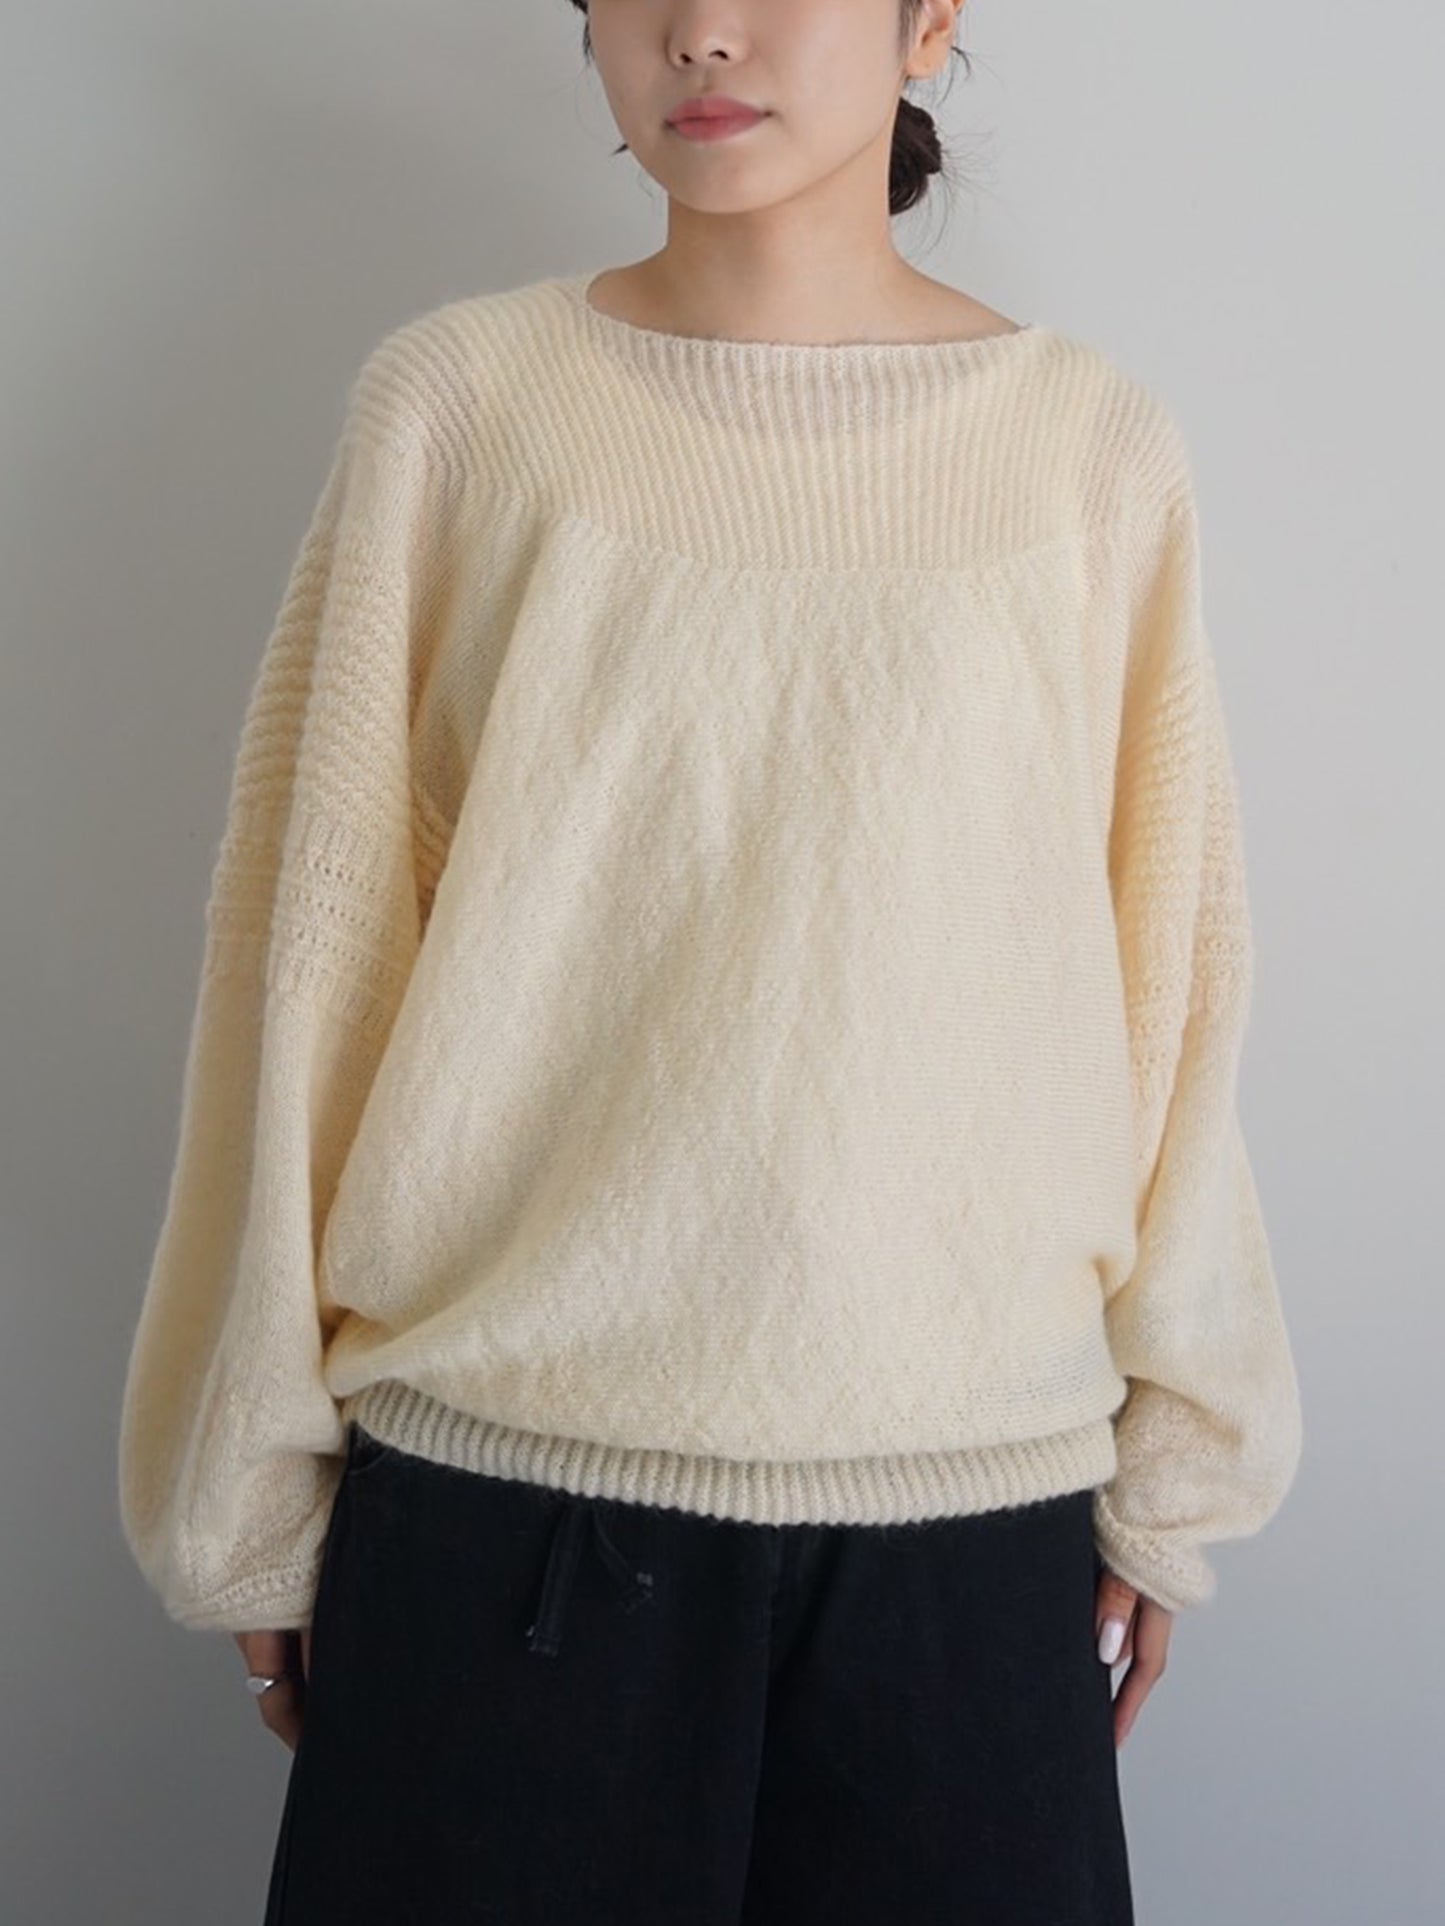 JöICEADDED /  Rounded Geometric knit sweater